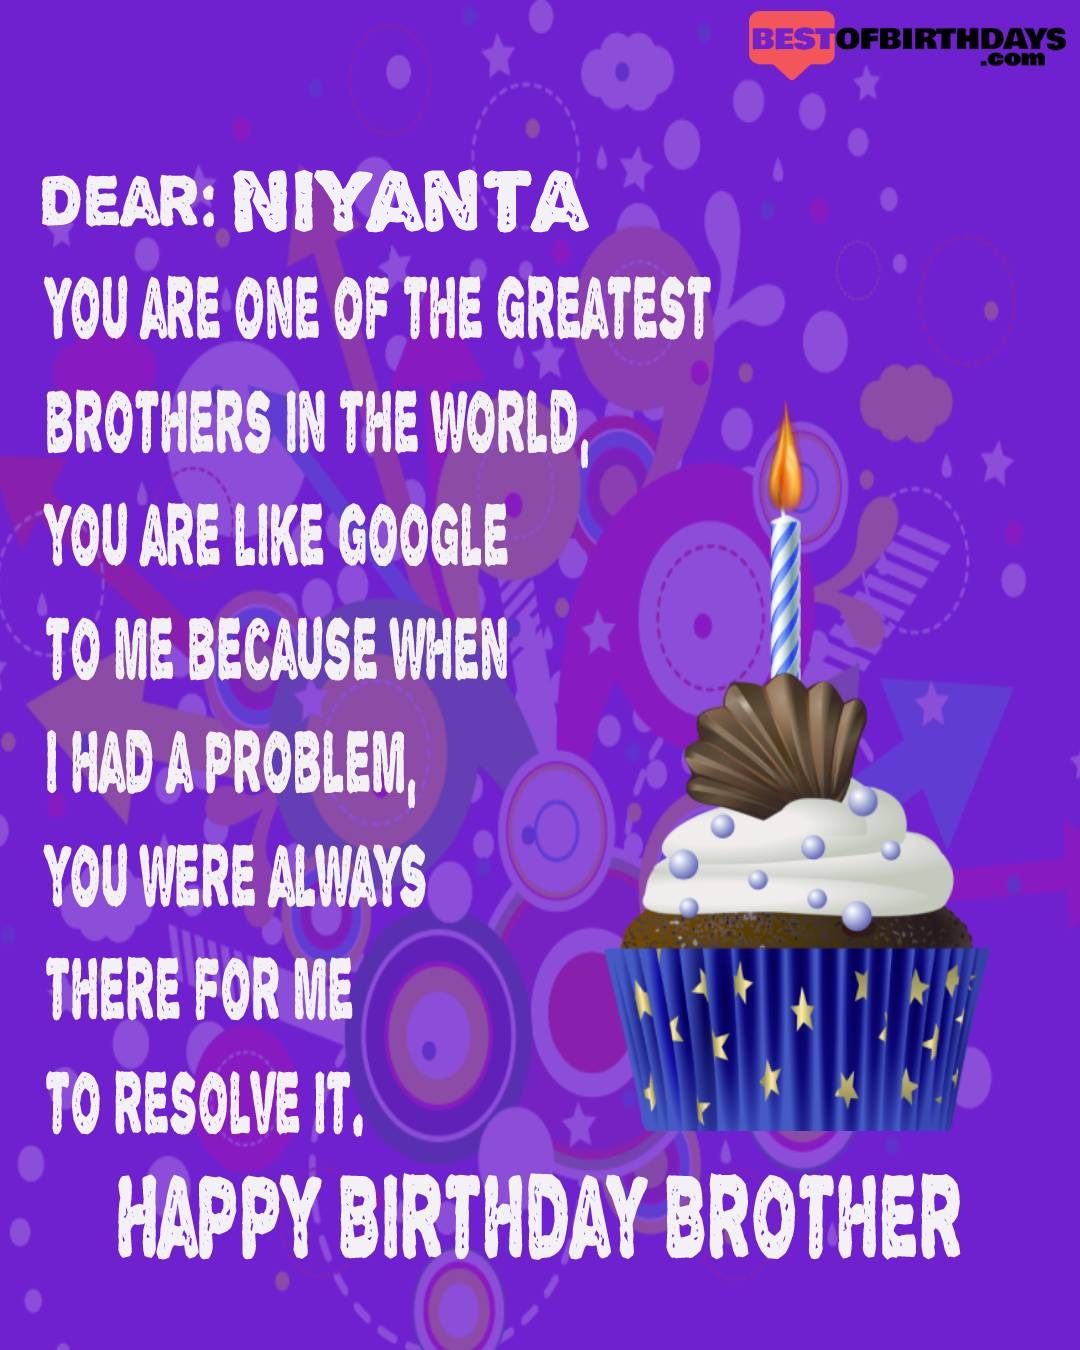 Happy birthday niyanta bhai brother bro